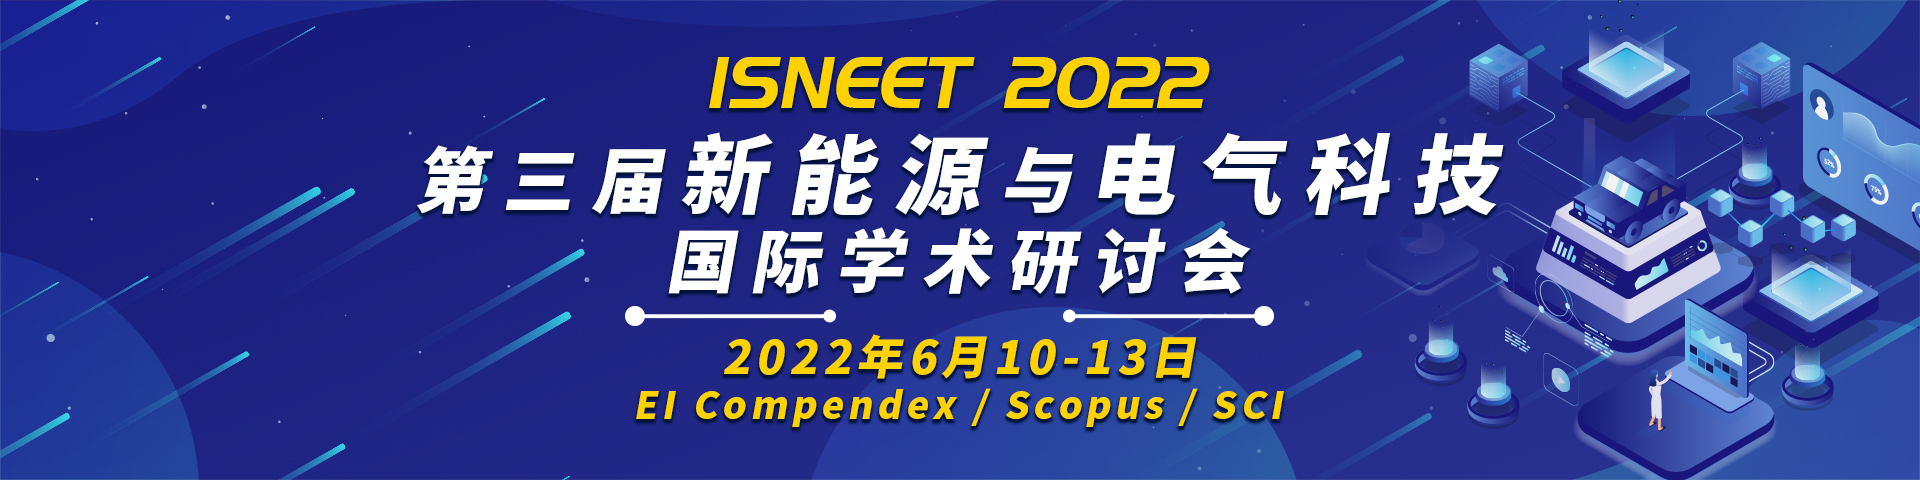 2022年7月-ISNEET-2022-艾思平台banner-林倩瑜-20210908.jpg